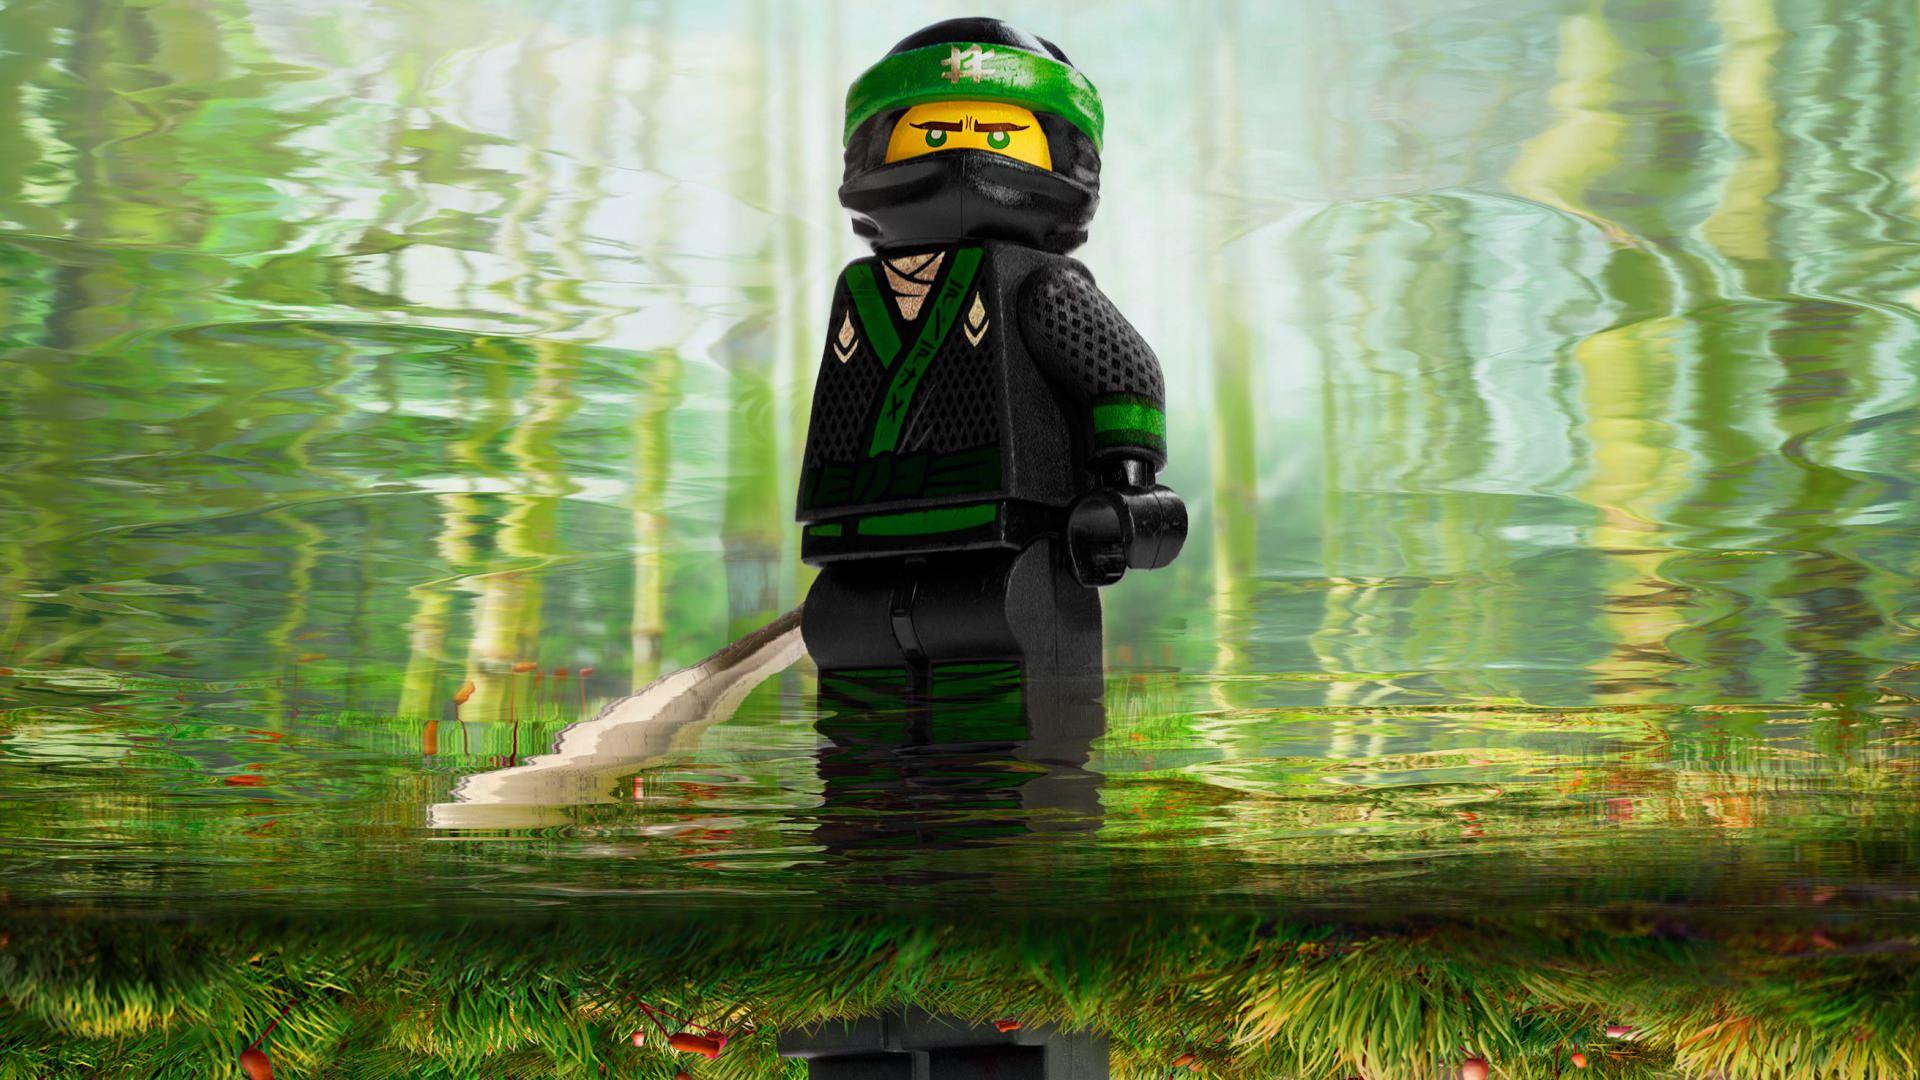 LEGO Ninjago Movie Minifigure - Lloyd with Blue Ninja Armor and Hair - wide 3